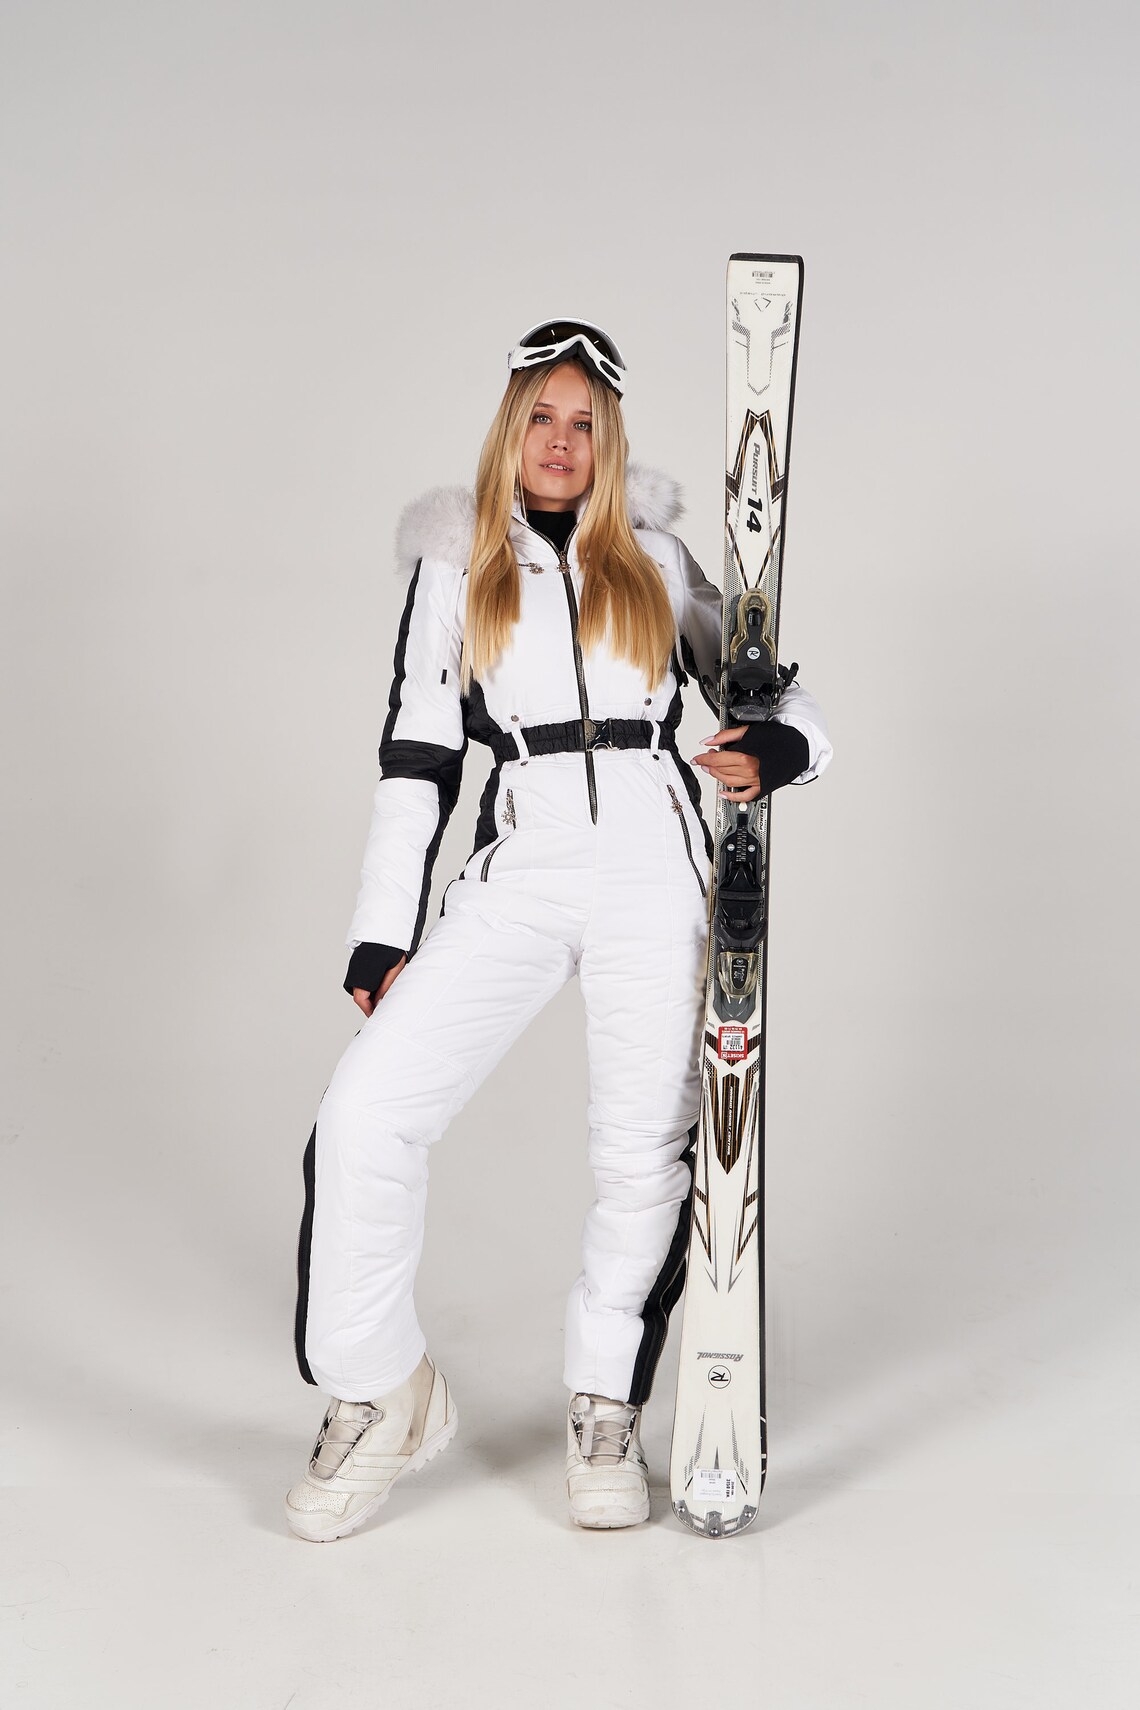 Women Ski jumpsuit white with black insert Ski overall bright | Etsy